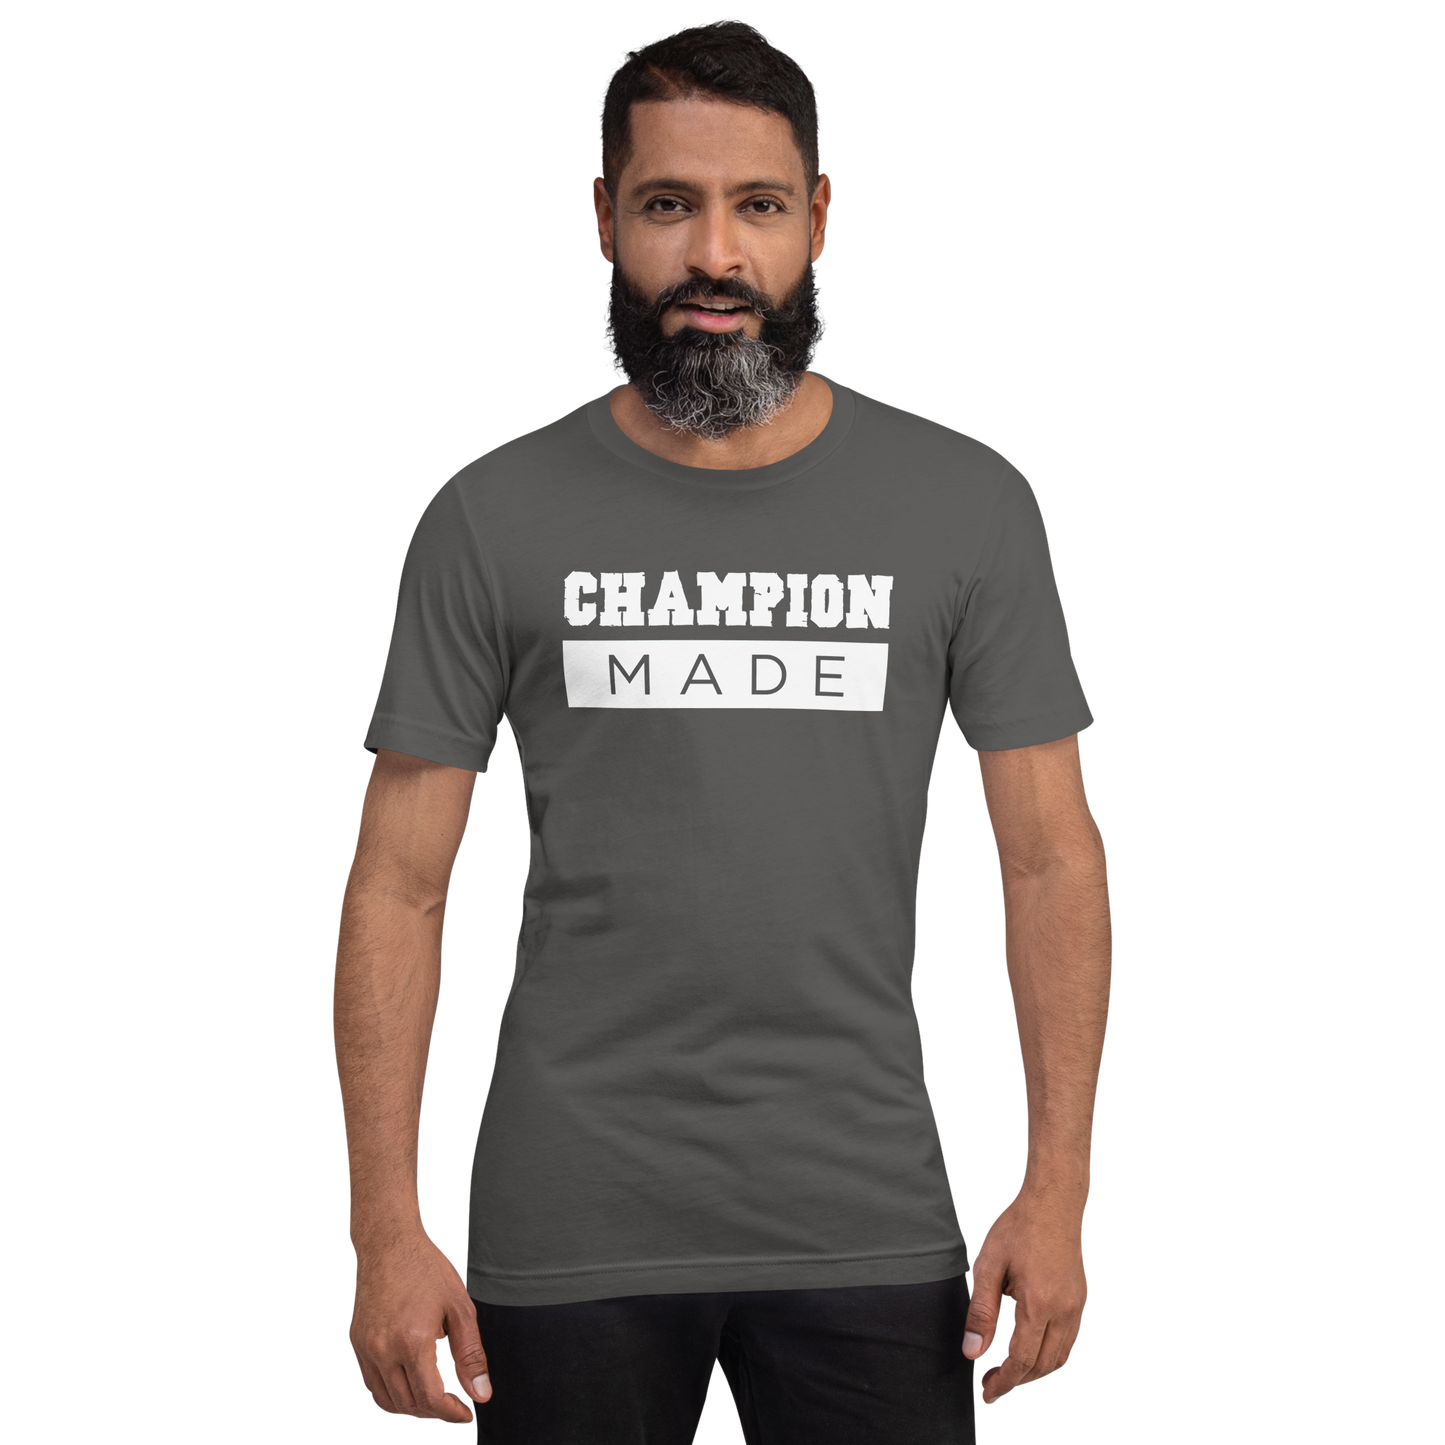 Champion Made Unisex T-Shirt